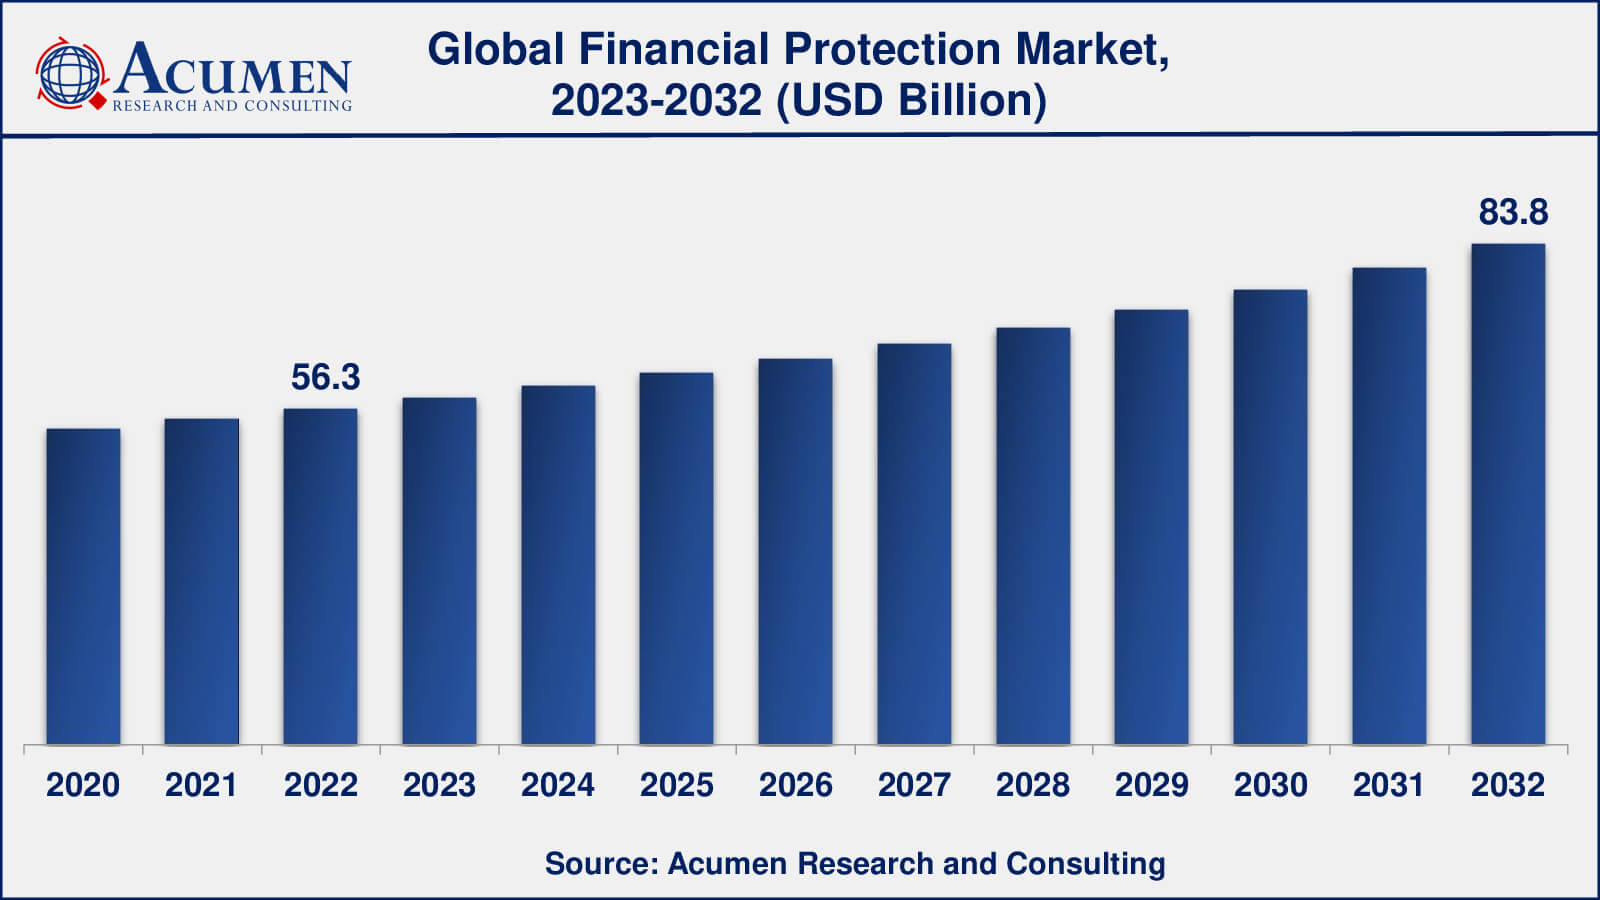 Financial Protection Market Analysis Period